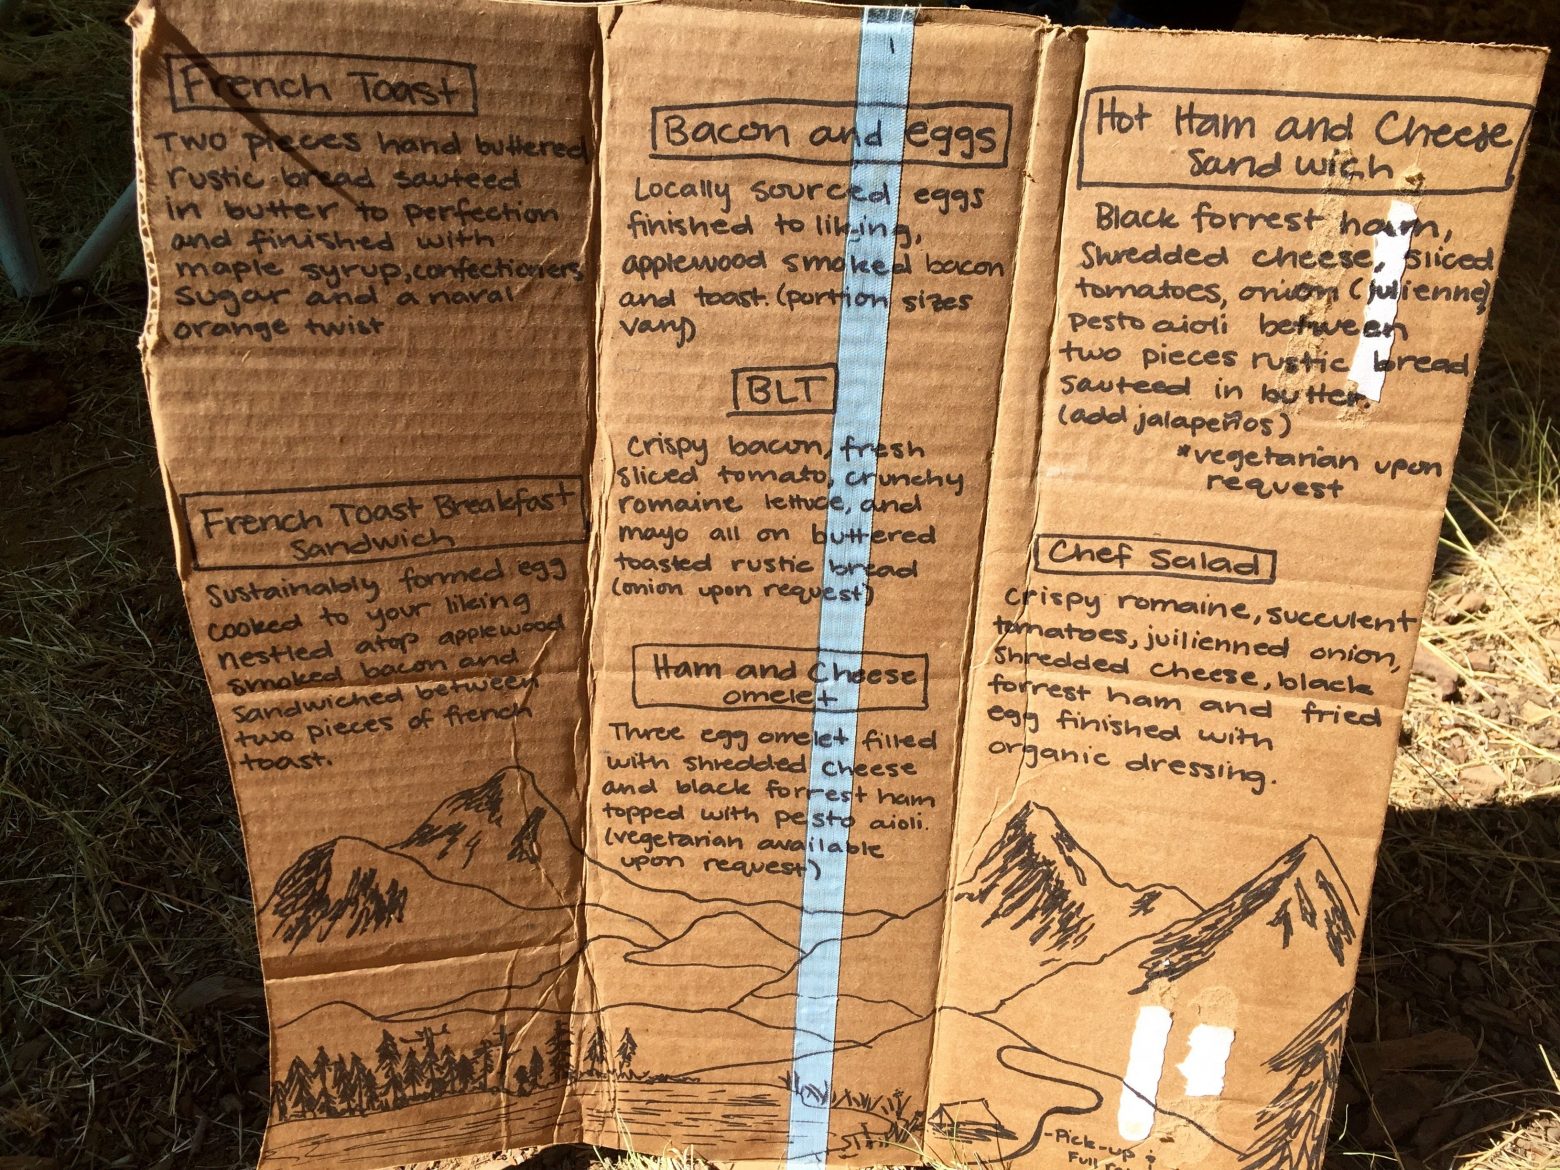 Cardboard handwritten menu at Le Bistro trail magic